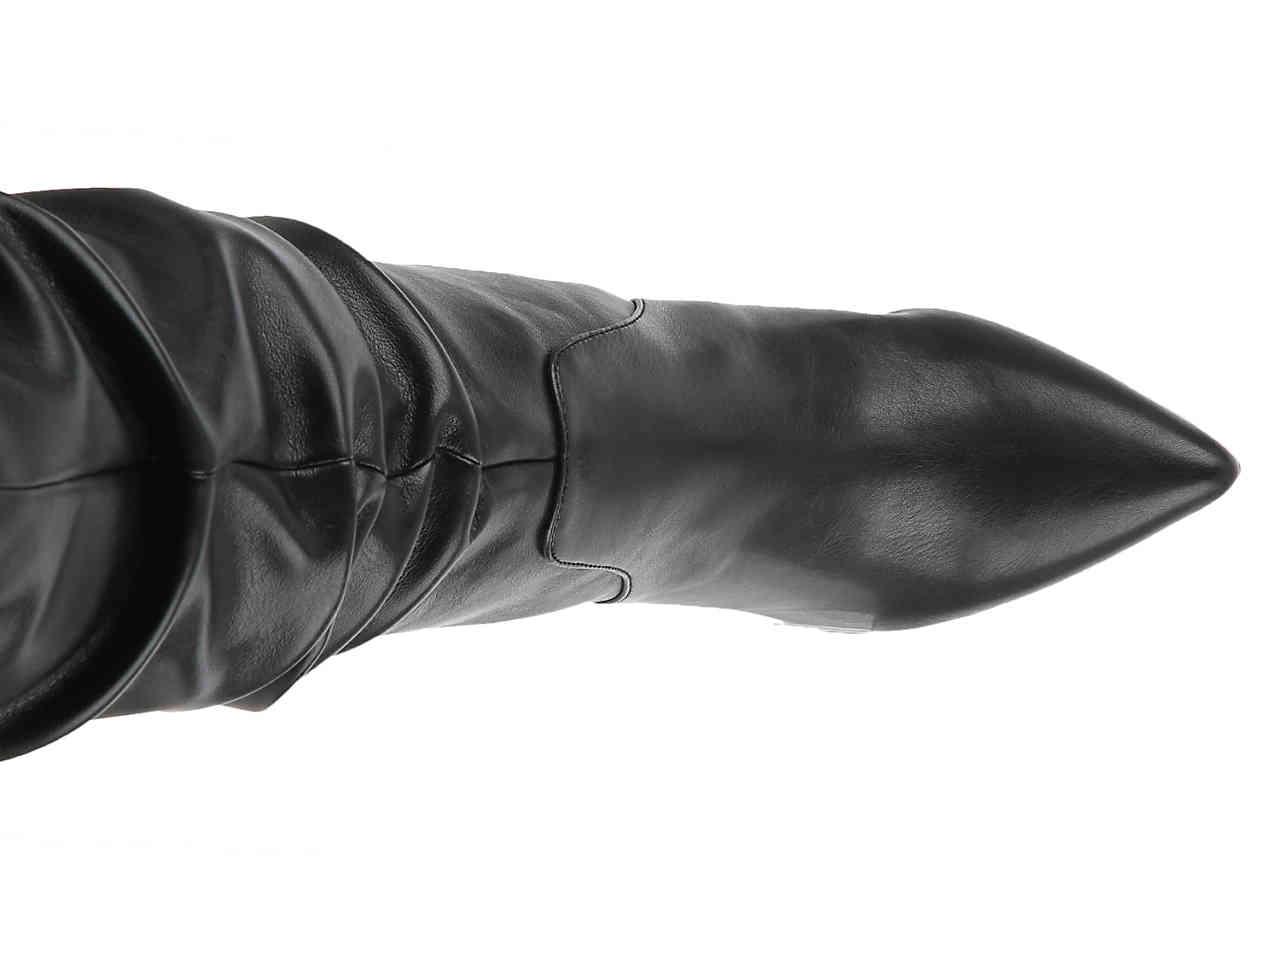 Jessica Simpson Saffrina Boot in Black - Lyst1280 x 960